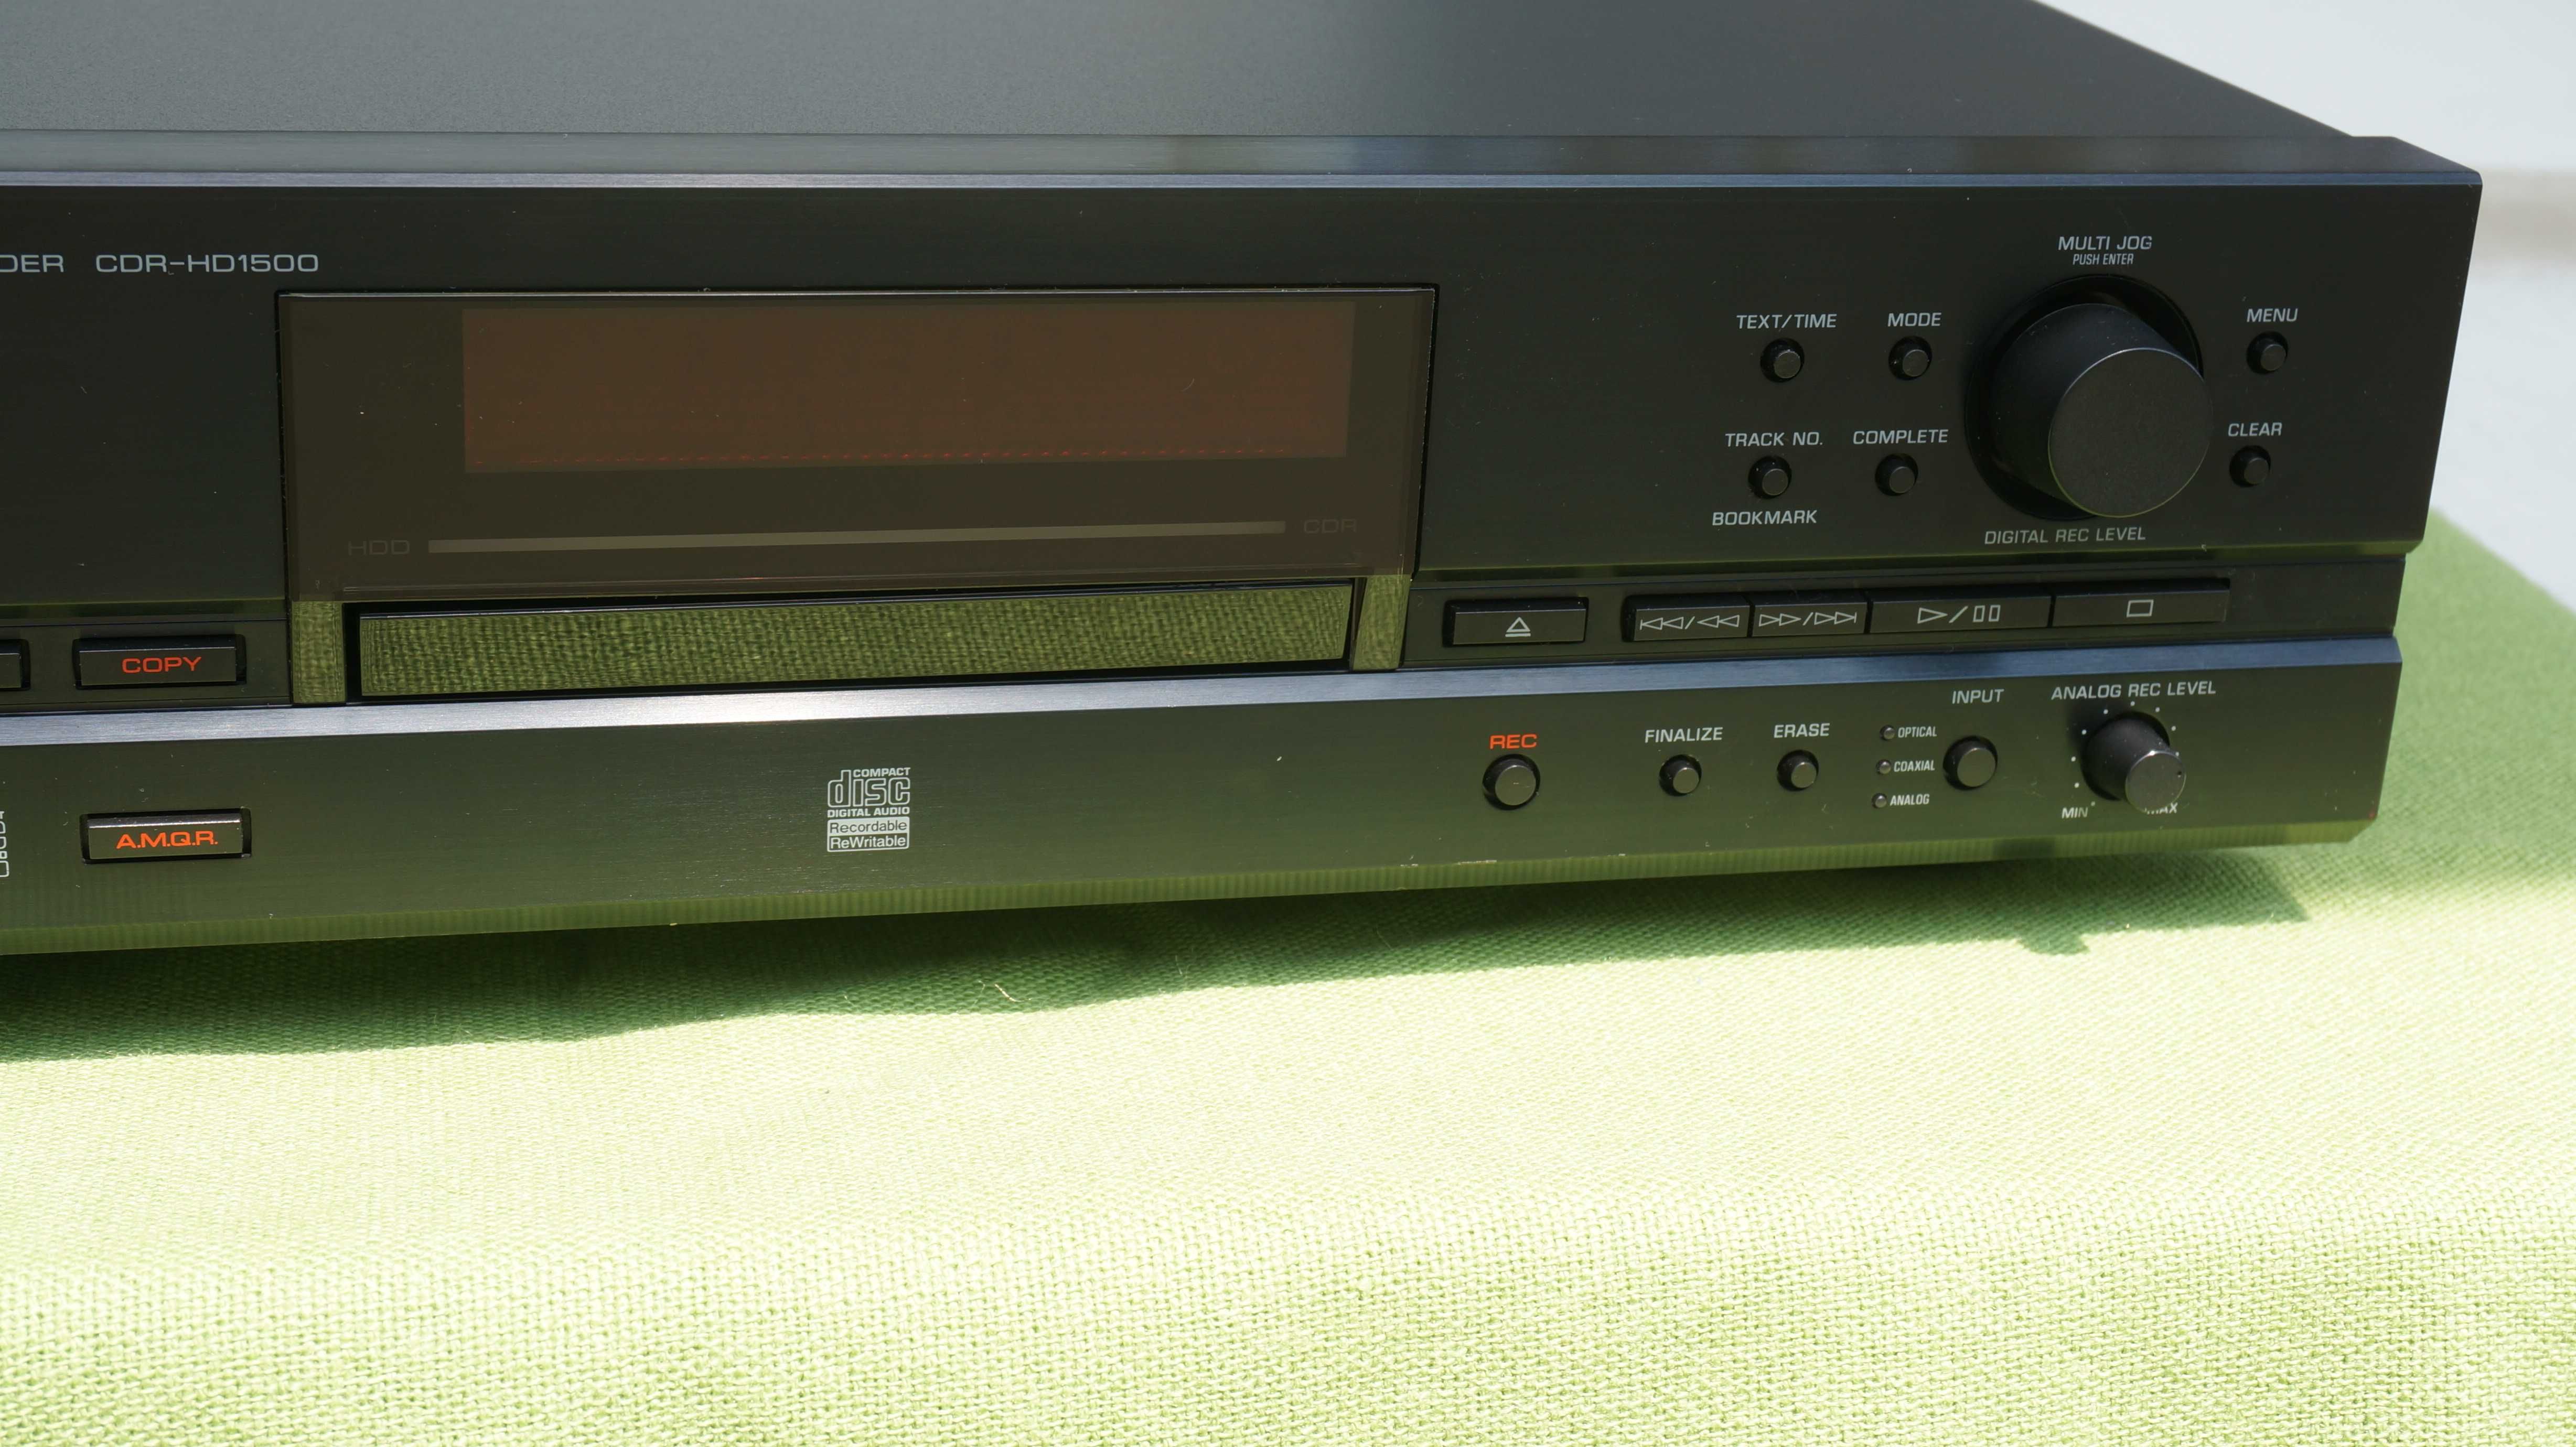 Yamaha CDR-HD1500 CD recorder HDD 300Gb